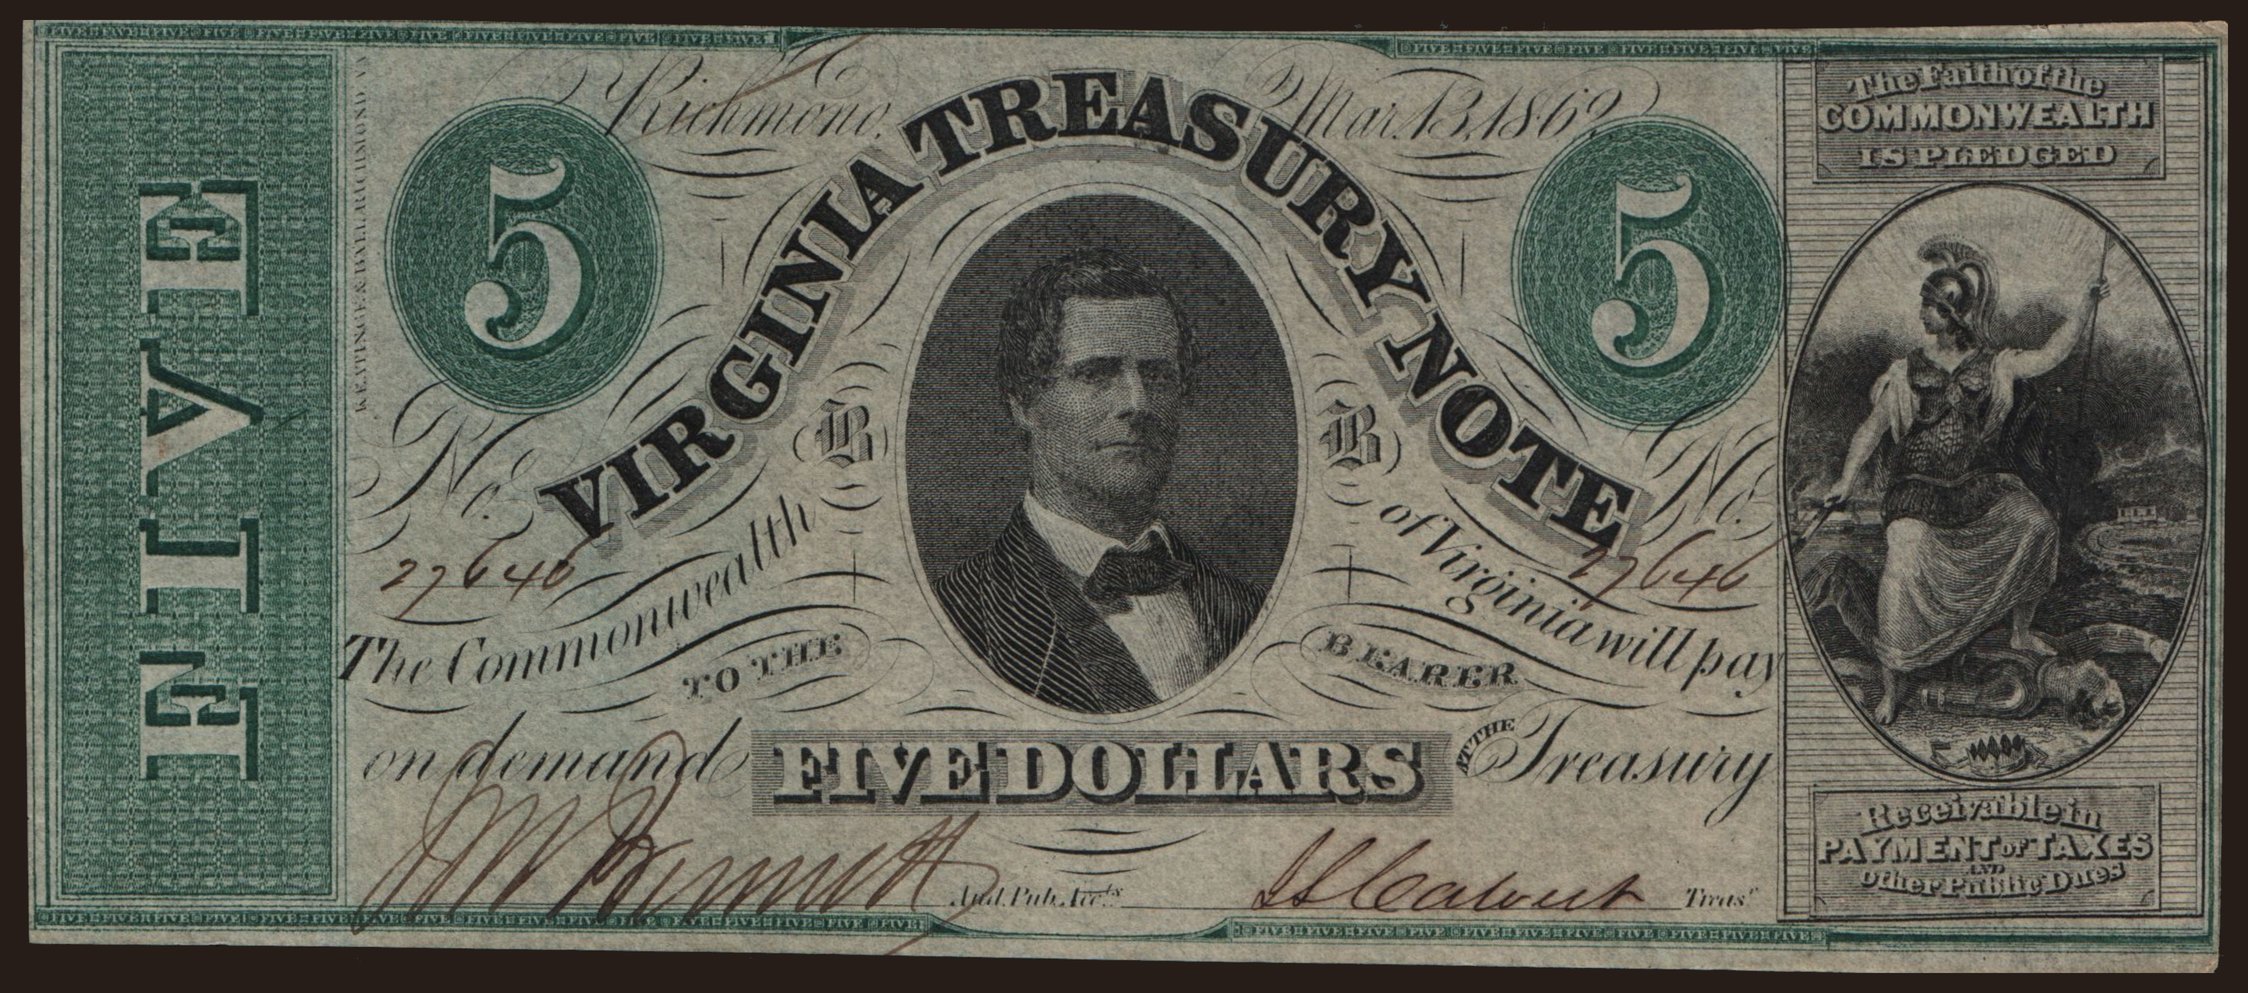 Virginia, 5 dollars, 1862